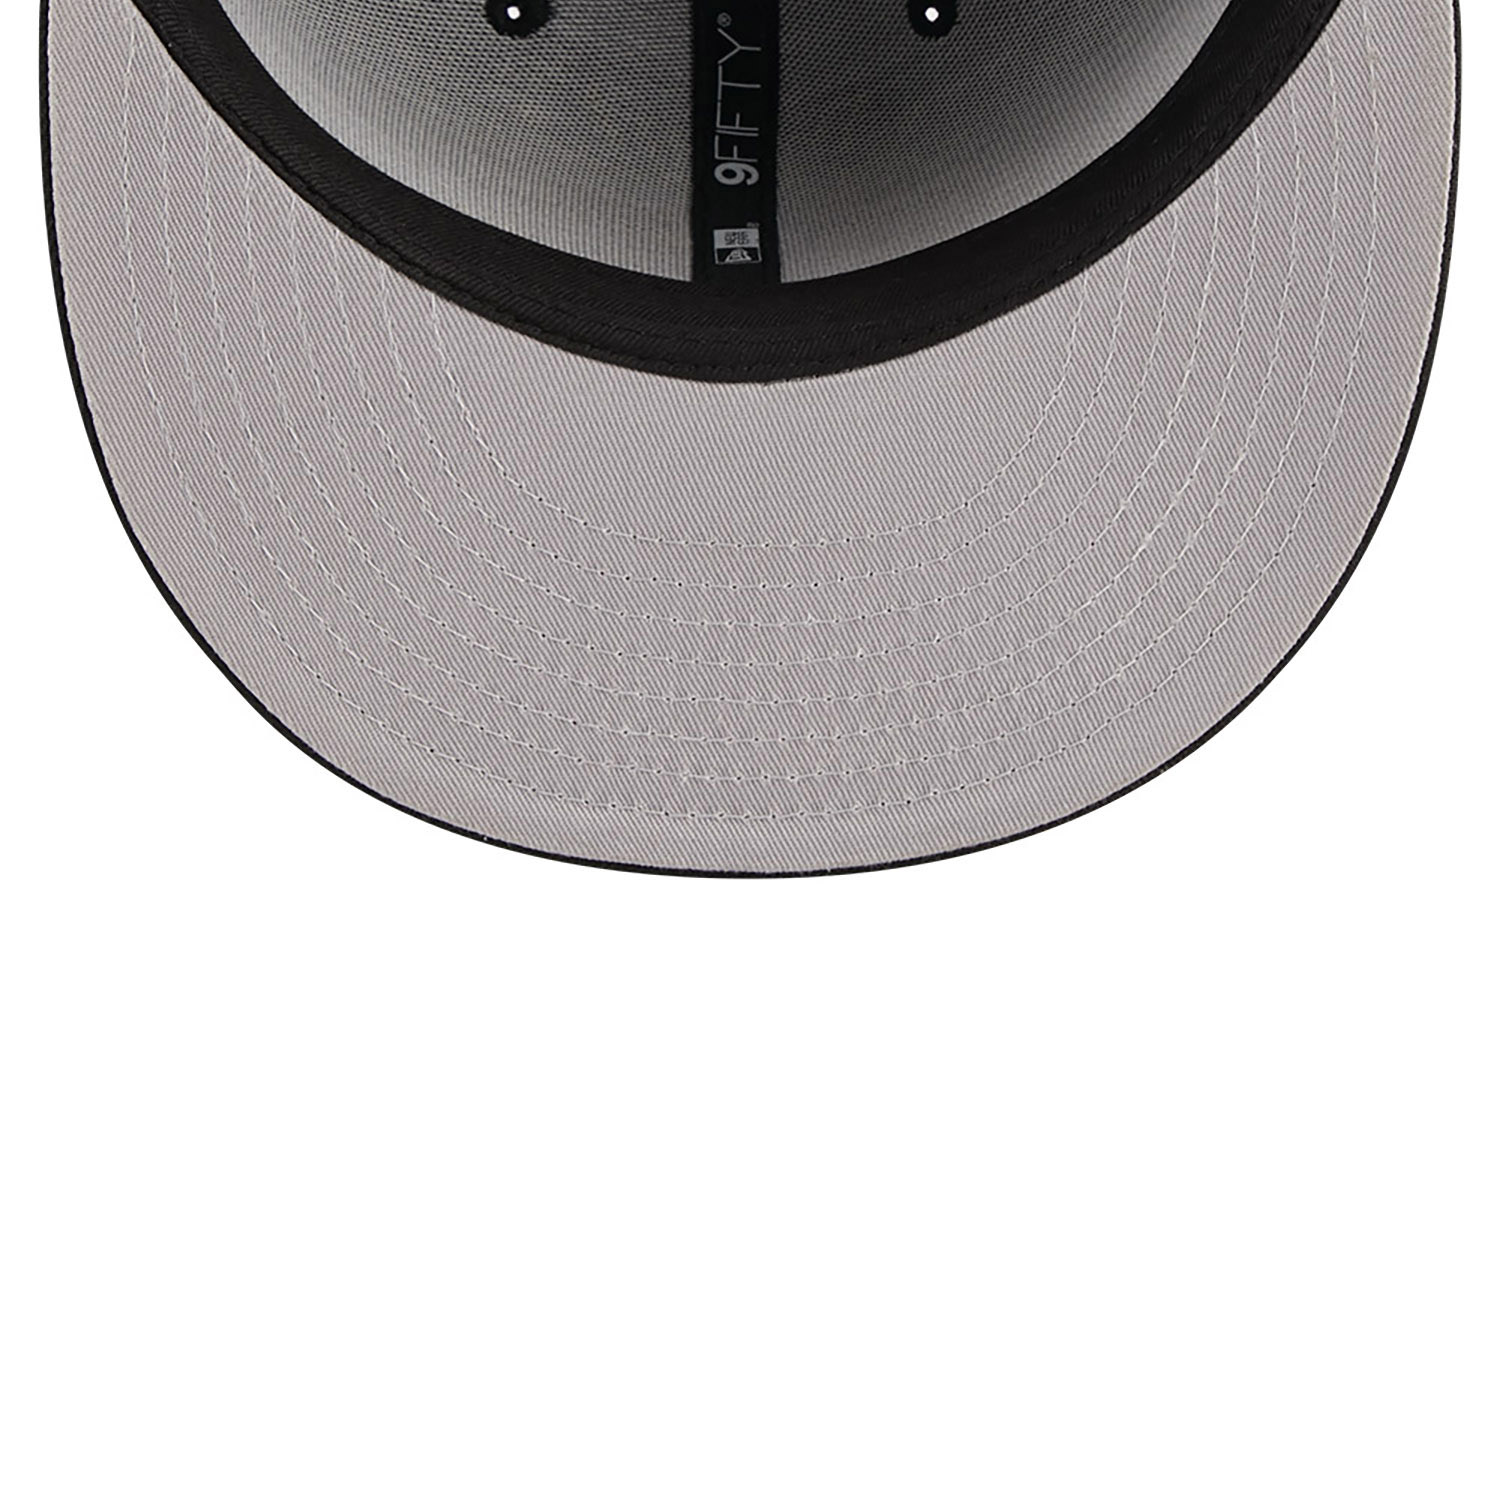 Atlanta Braves Metallic Logo Black 9FIFTY Snapback Cap